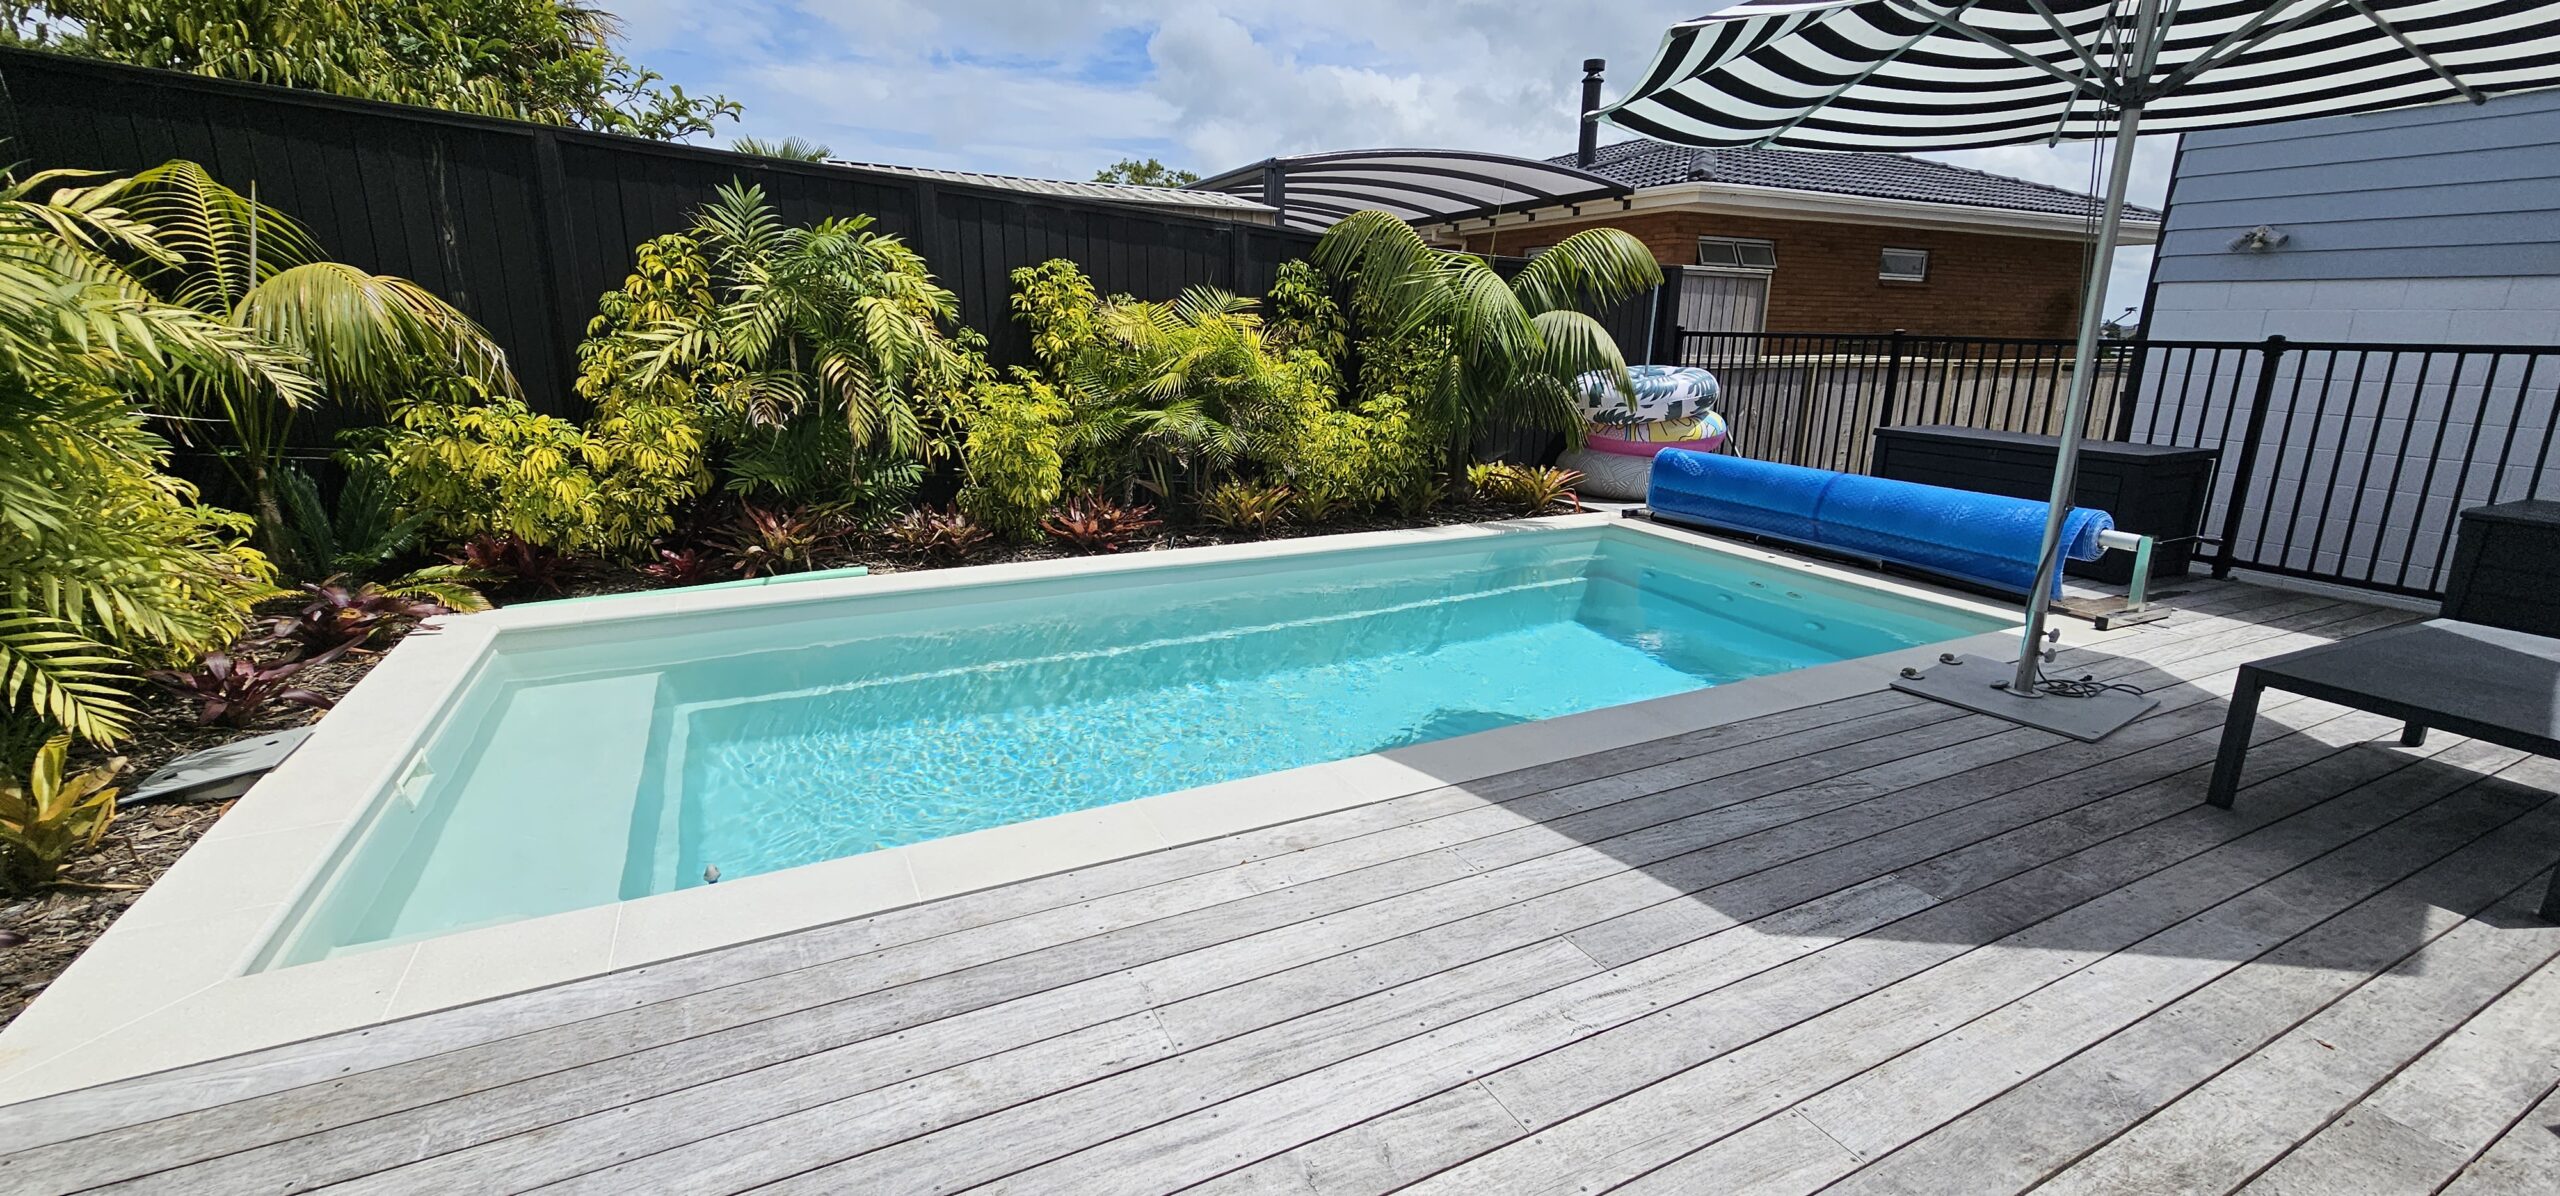 6.5 meter fibreglass swimming pool in the colour White